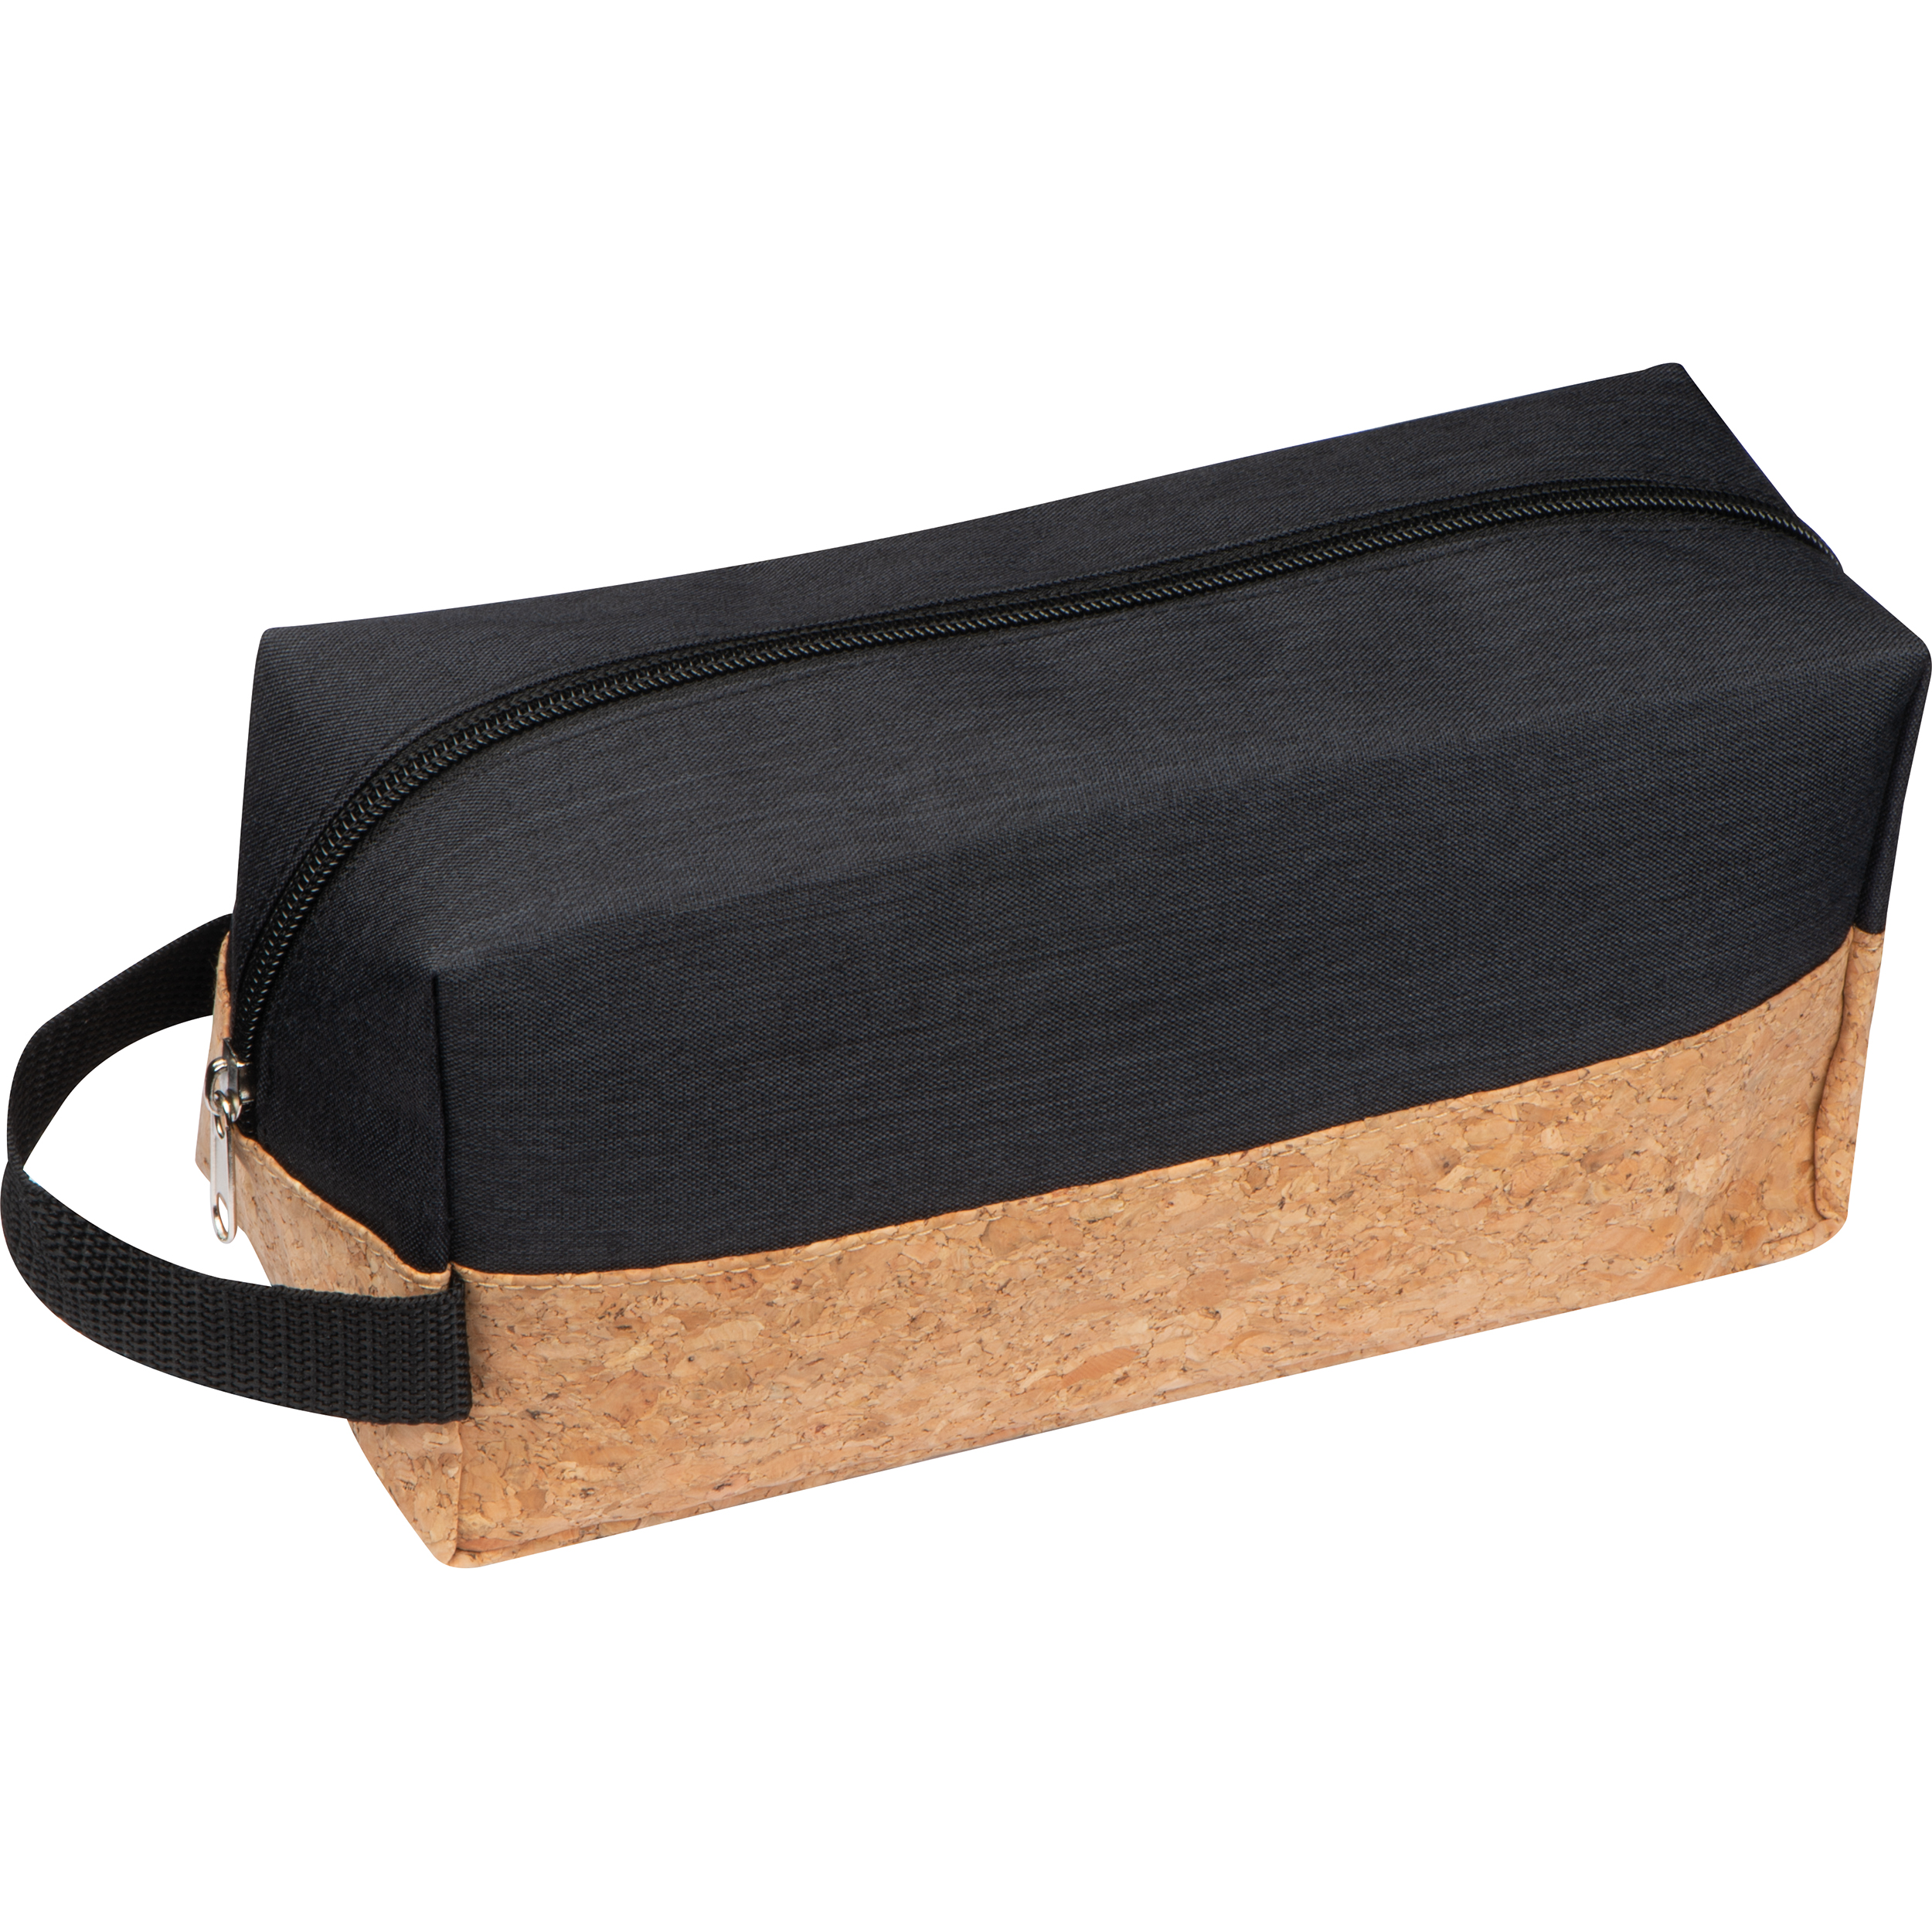 Cosmetic bag with cork bottom